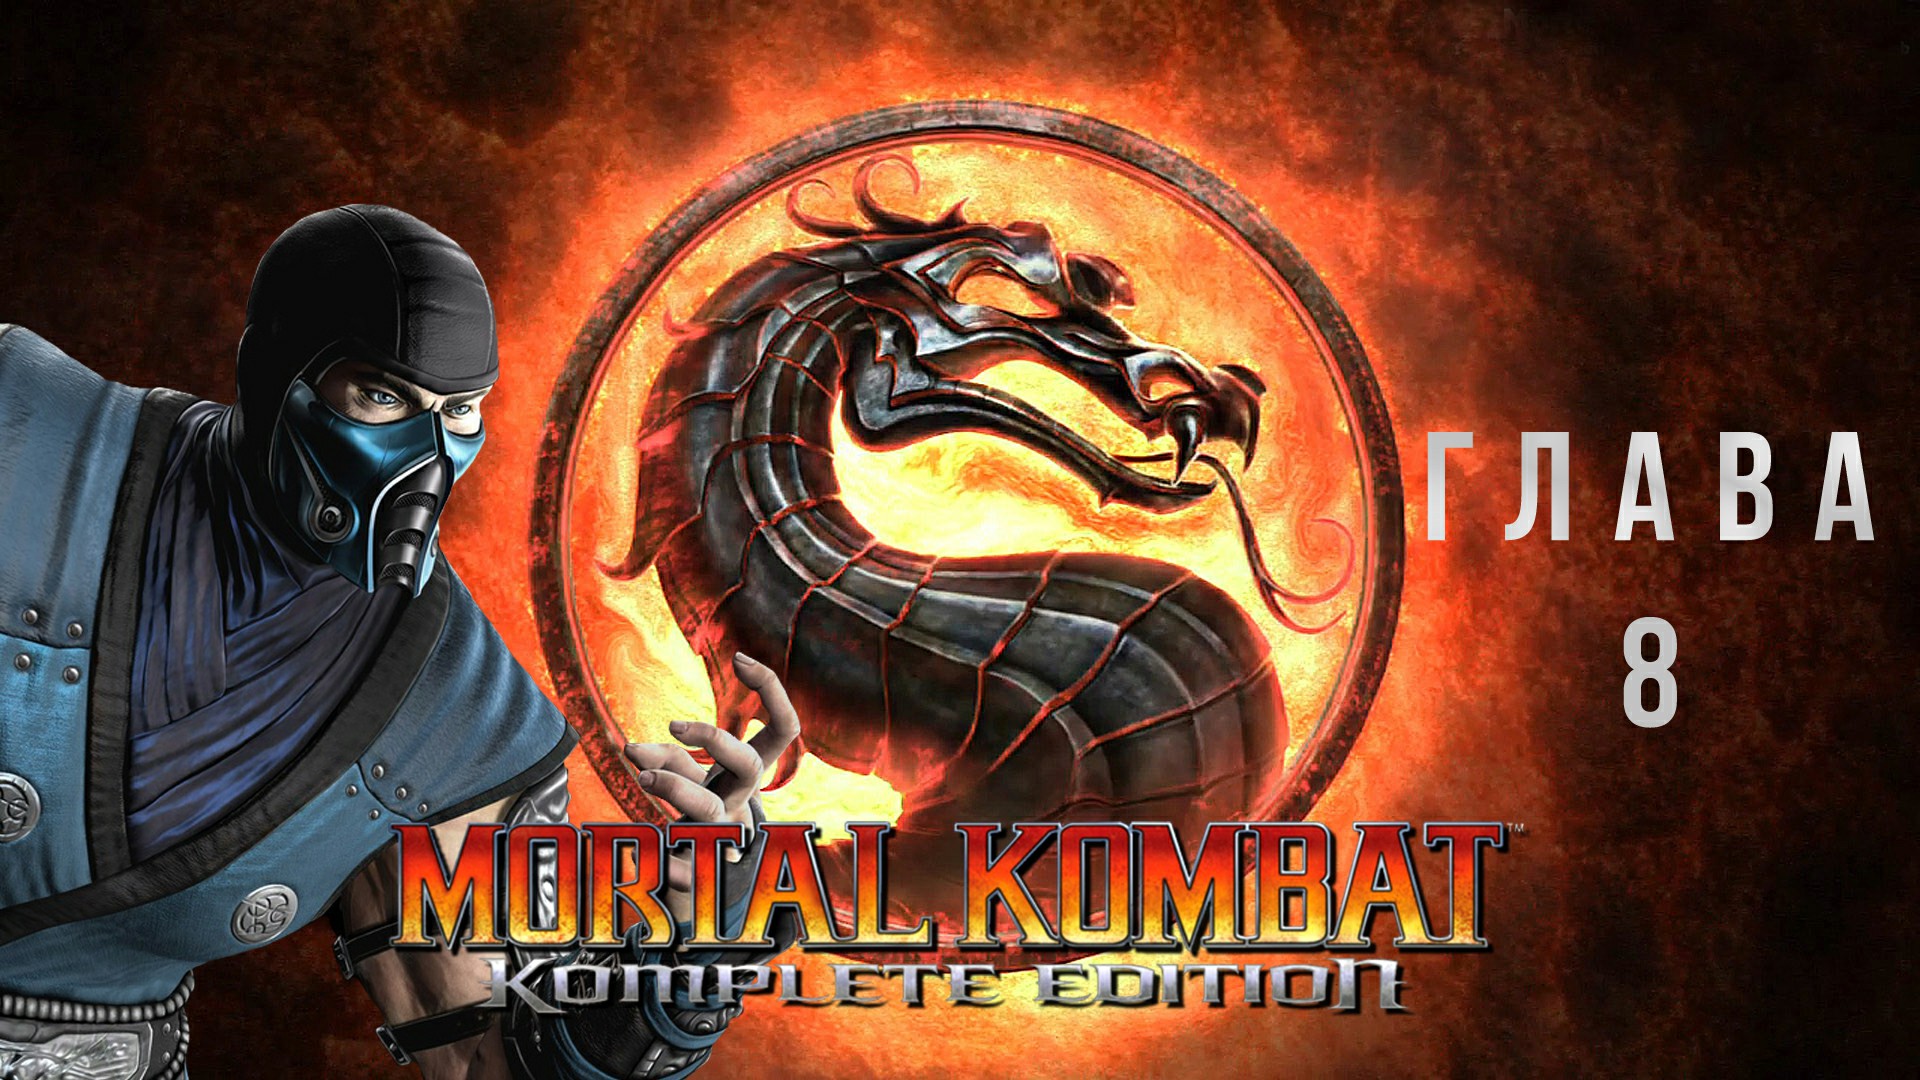 Mortal Kombat Komplete Edition Глава 8 - Sub-Zero без комментариев